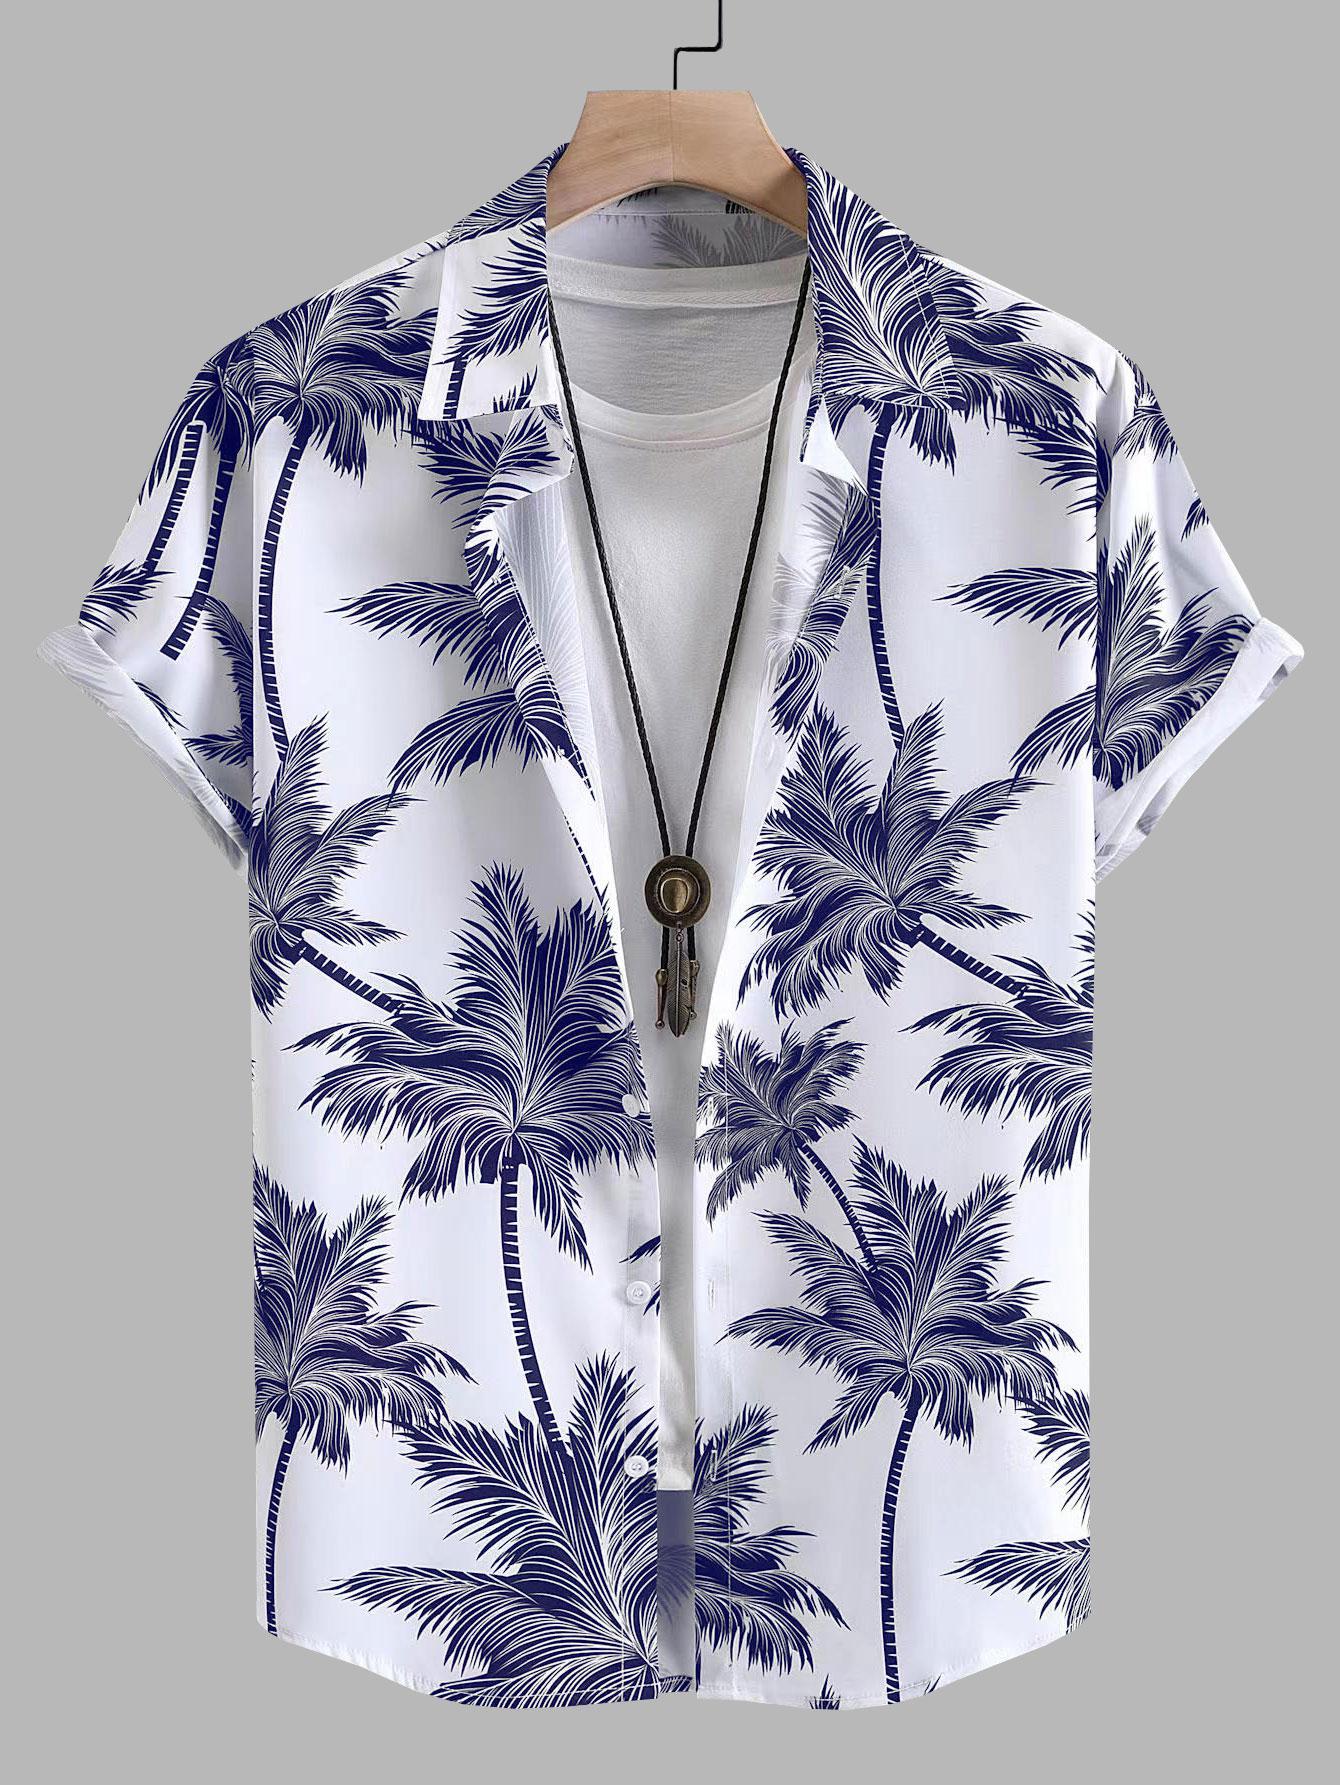 ZAFUL Men's Coconut Tree Print Short Sleeve Hawaiian Shirt L Blue